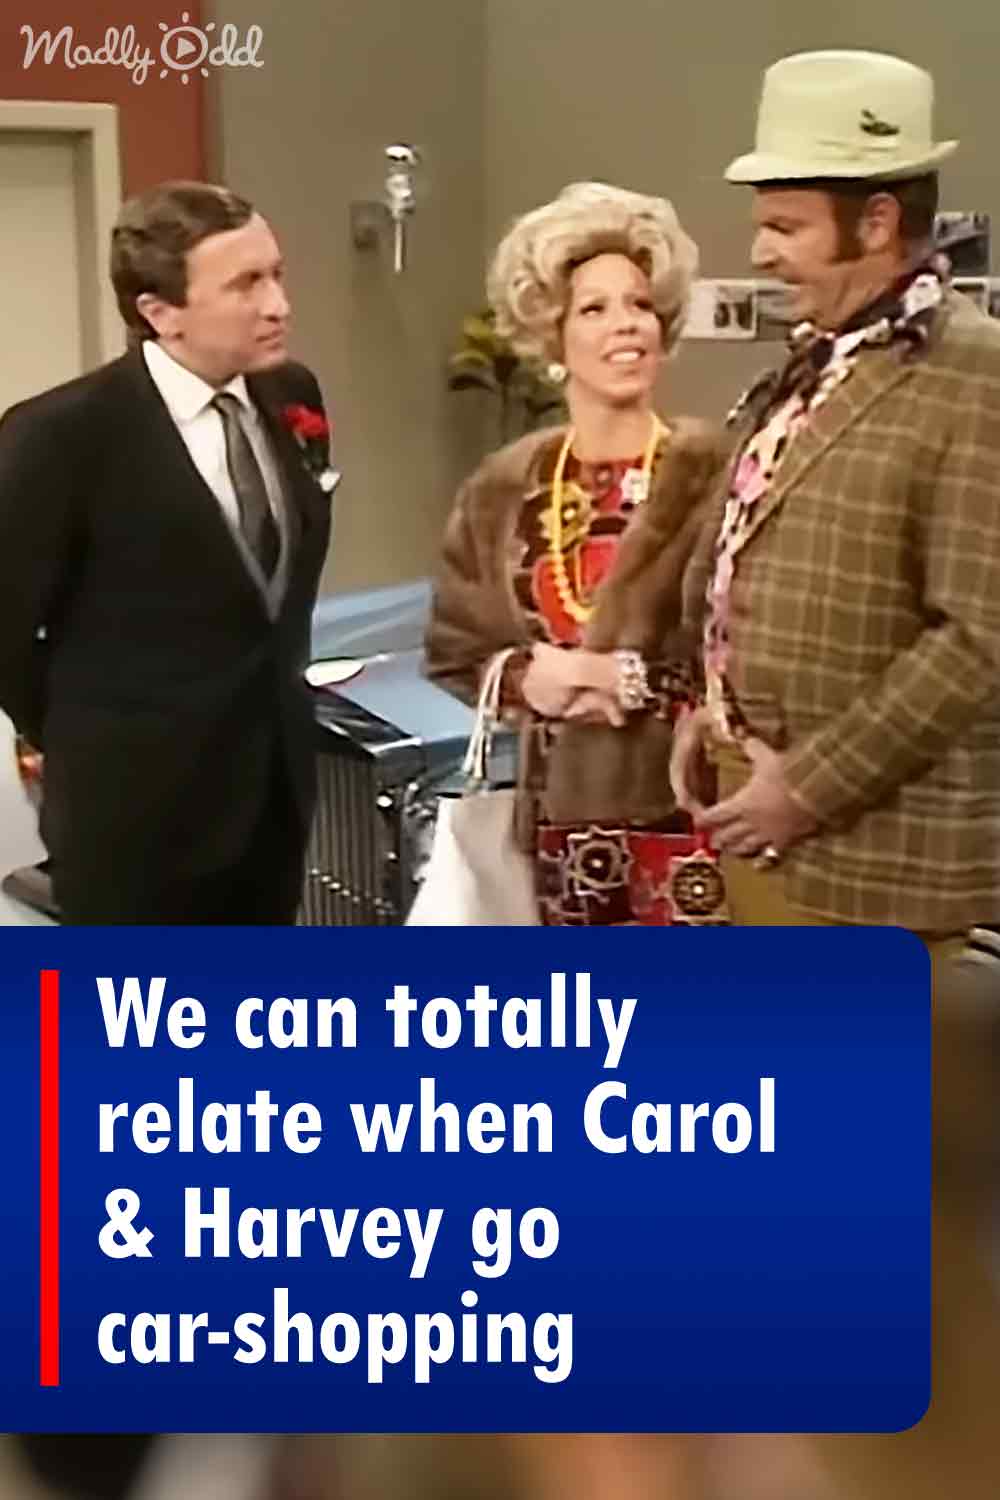 We can totally relate when Carol & Harvey go car-shopping